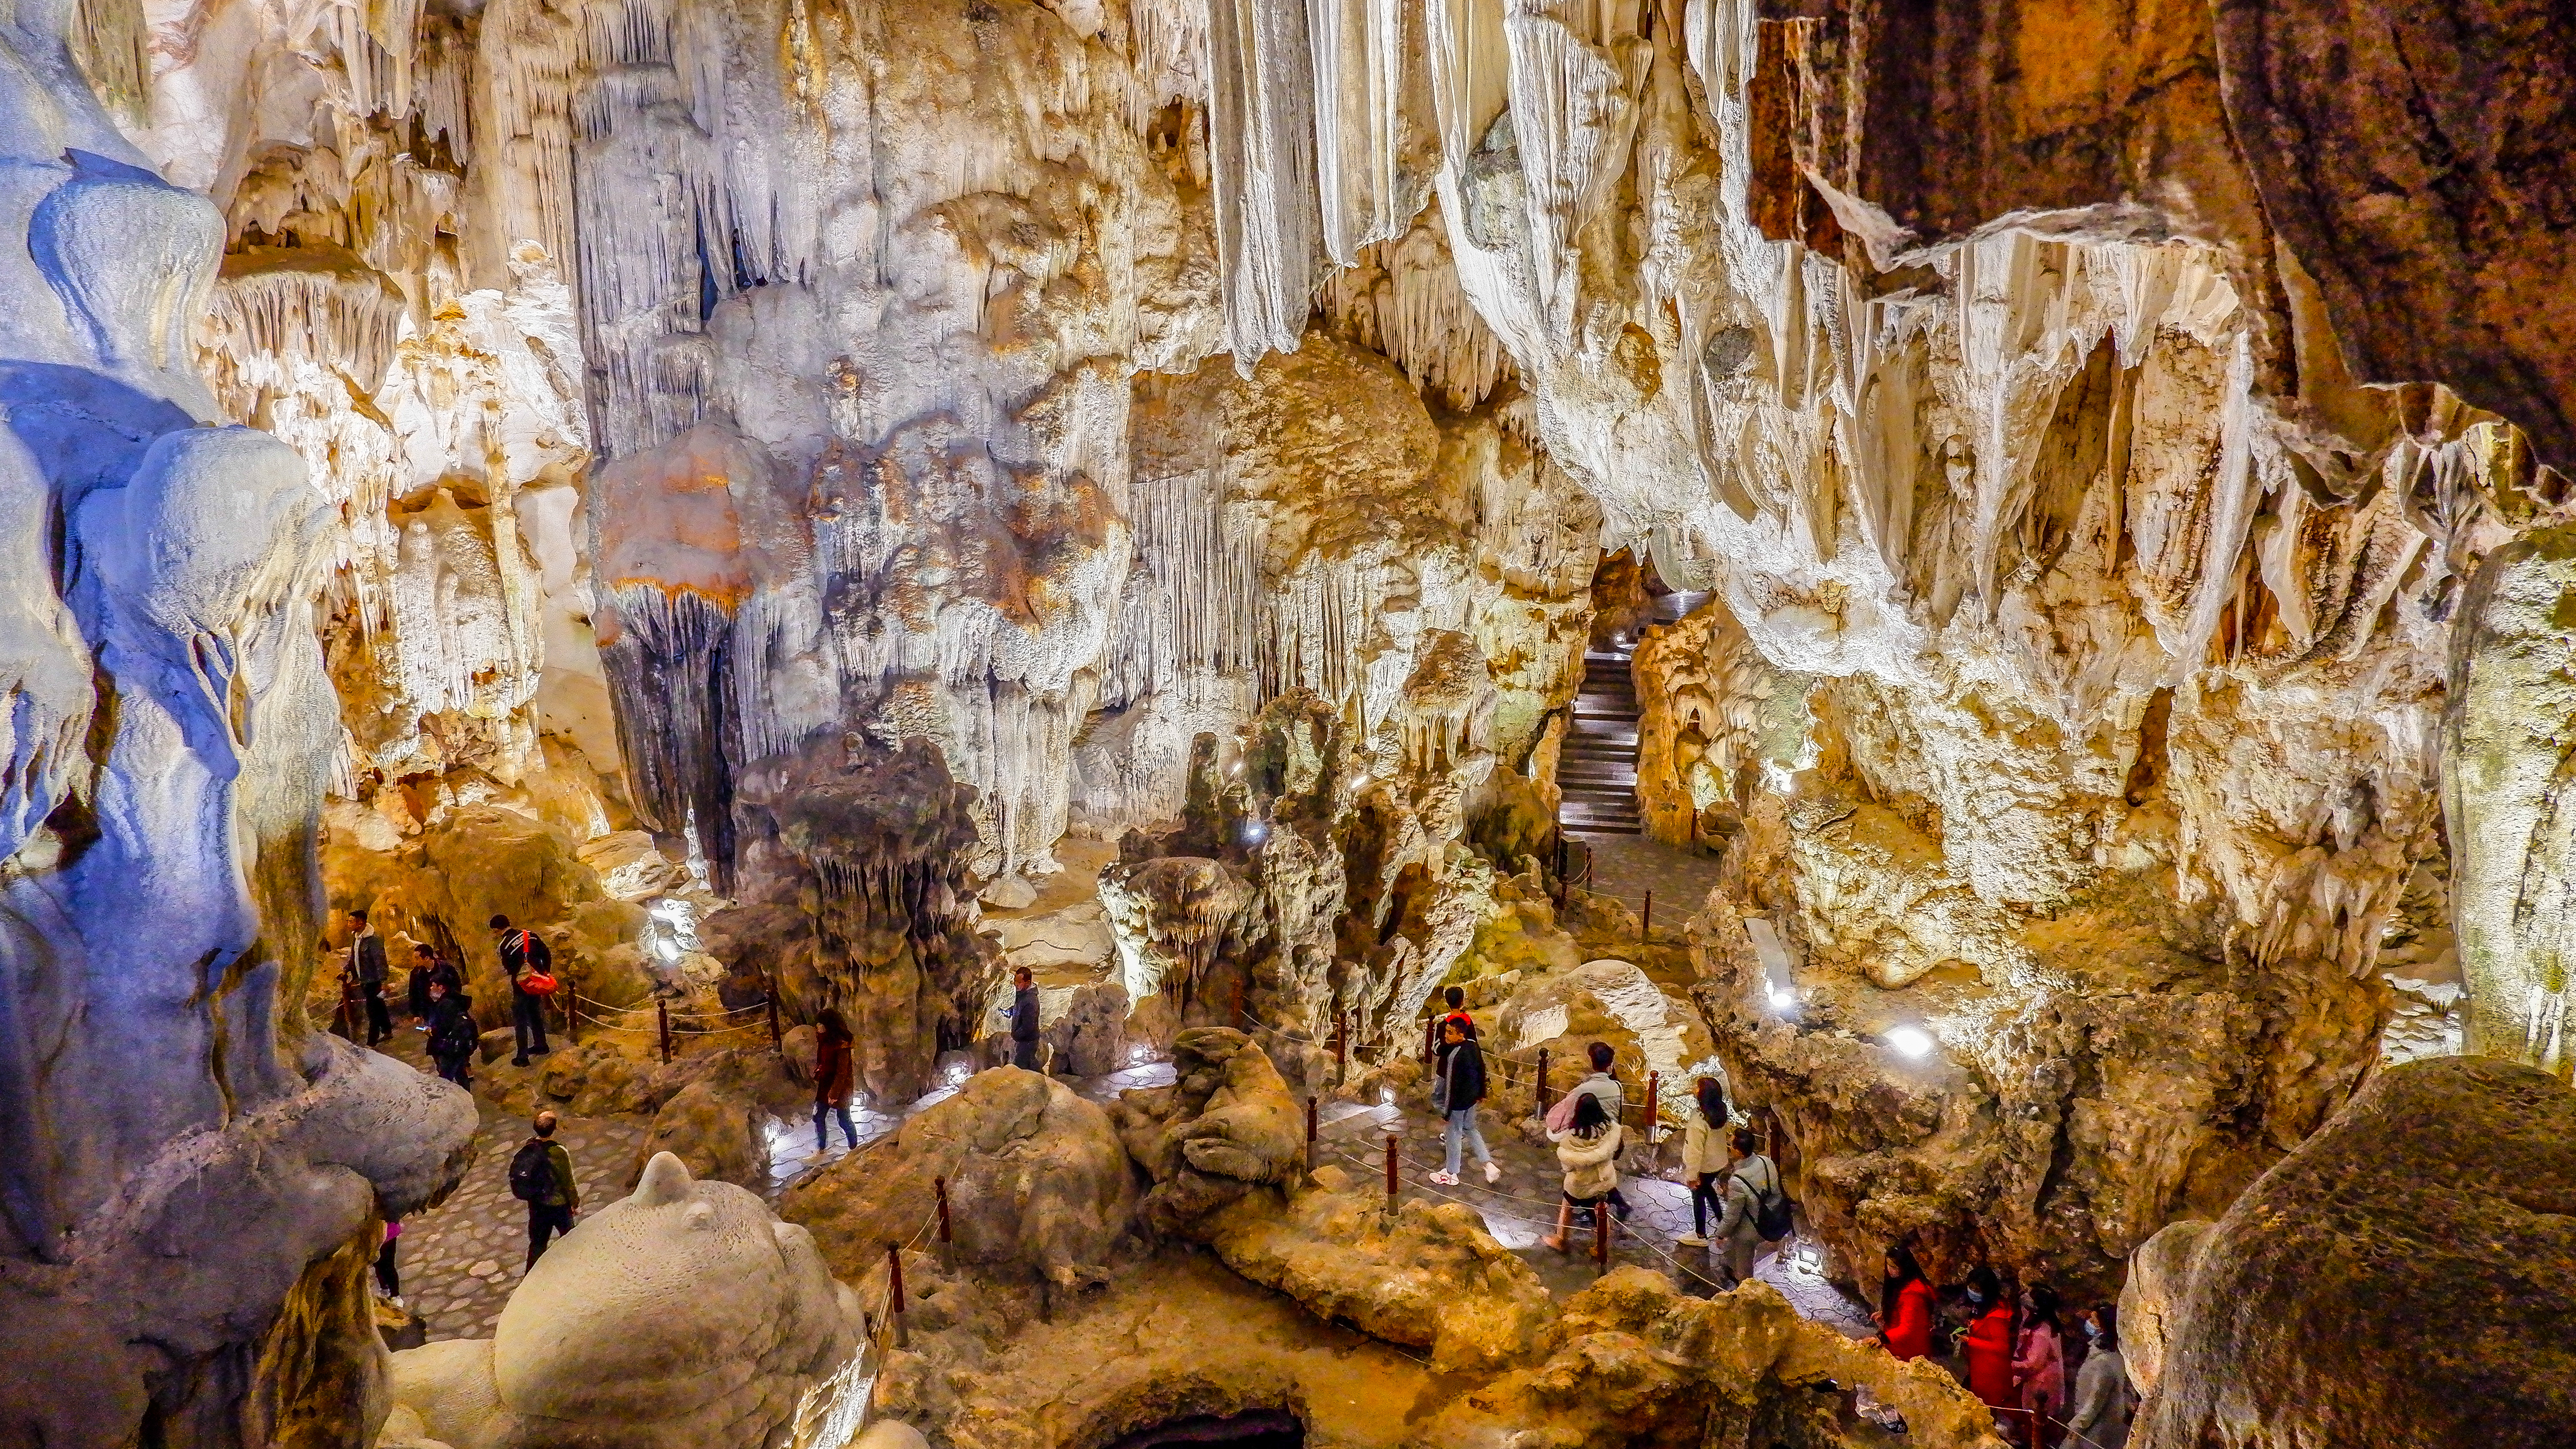 Thien Cung cave